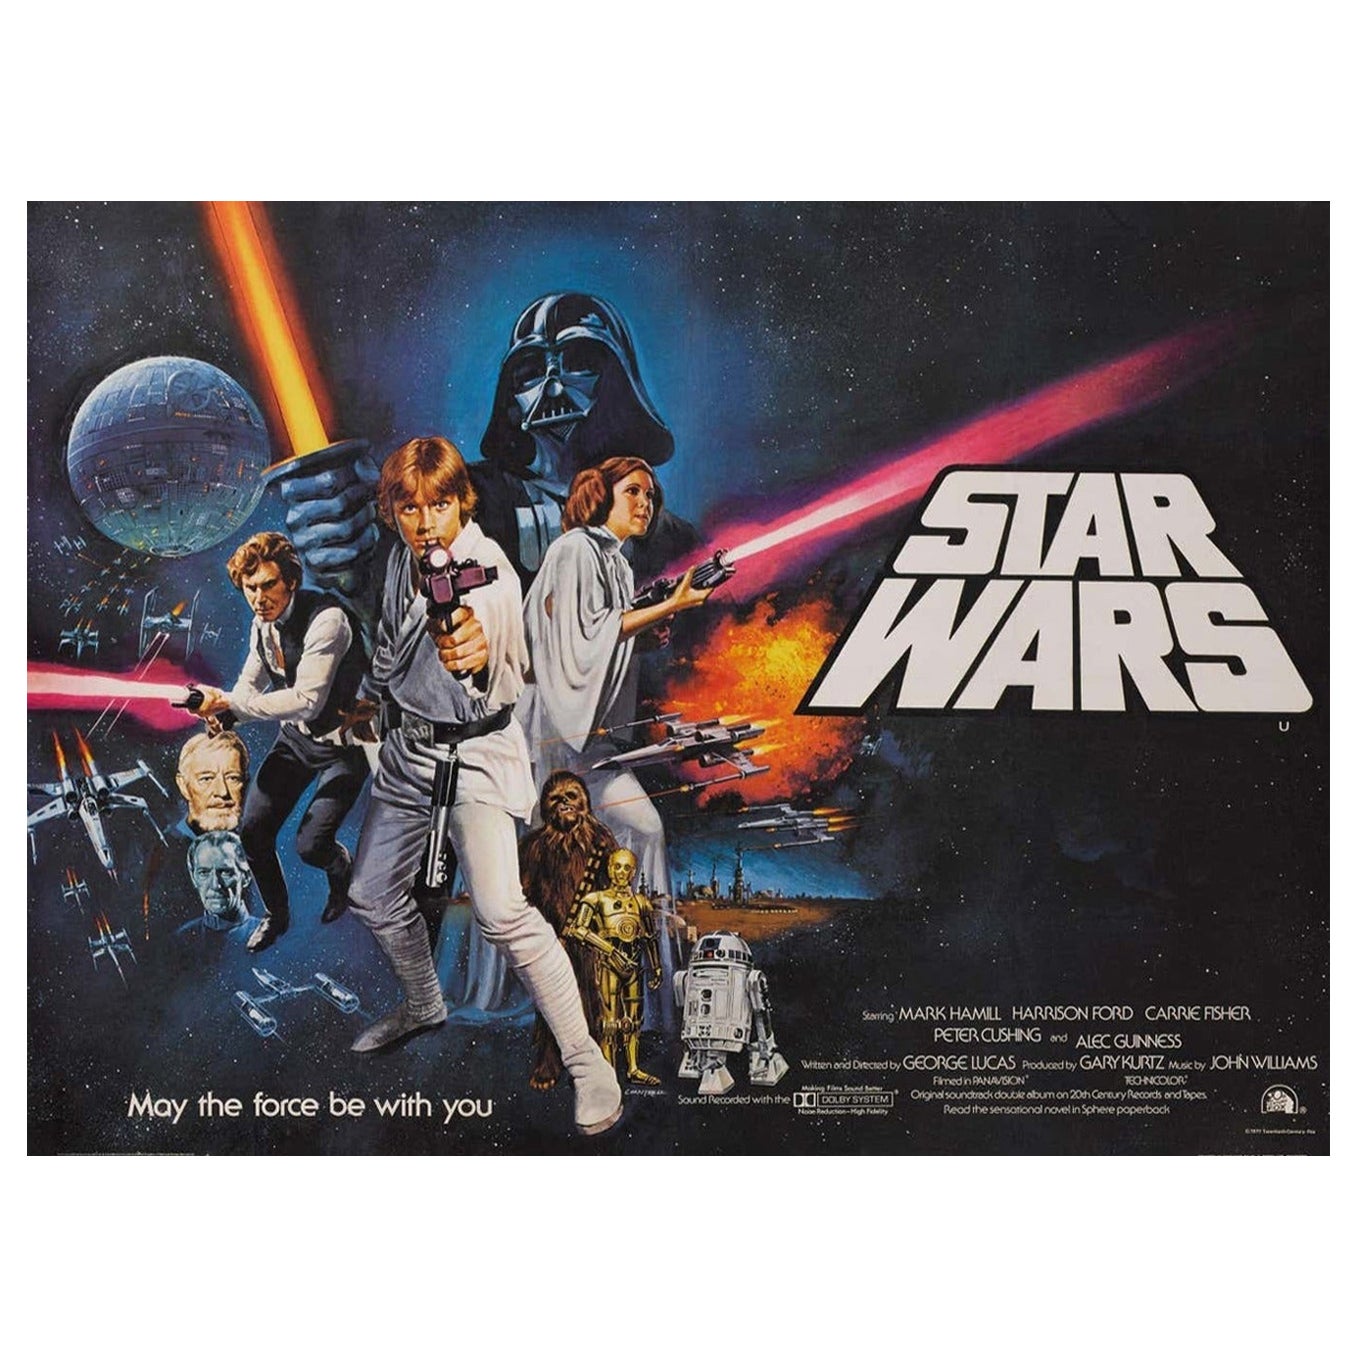 1977 Star Wars Original Vintage Poster im Angebot